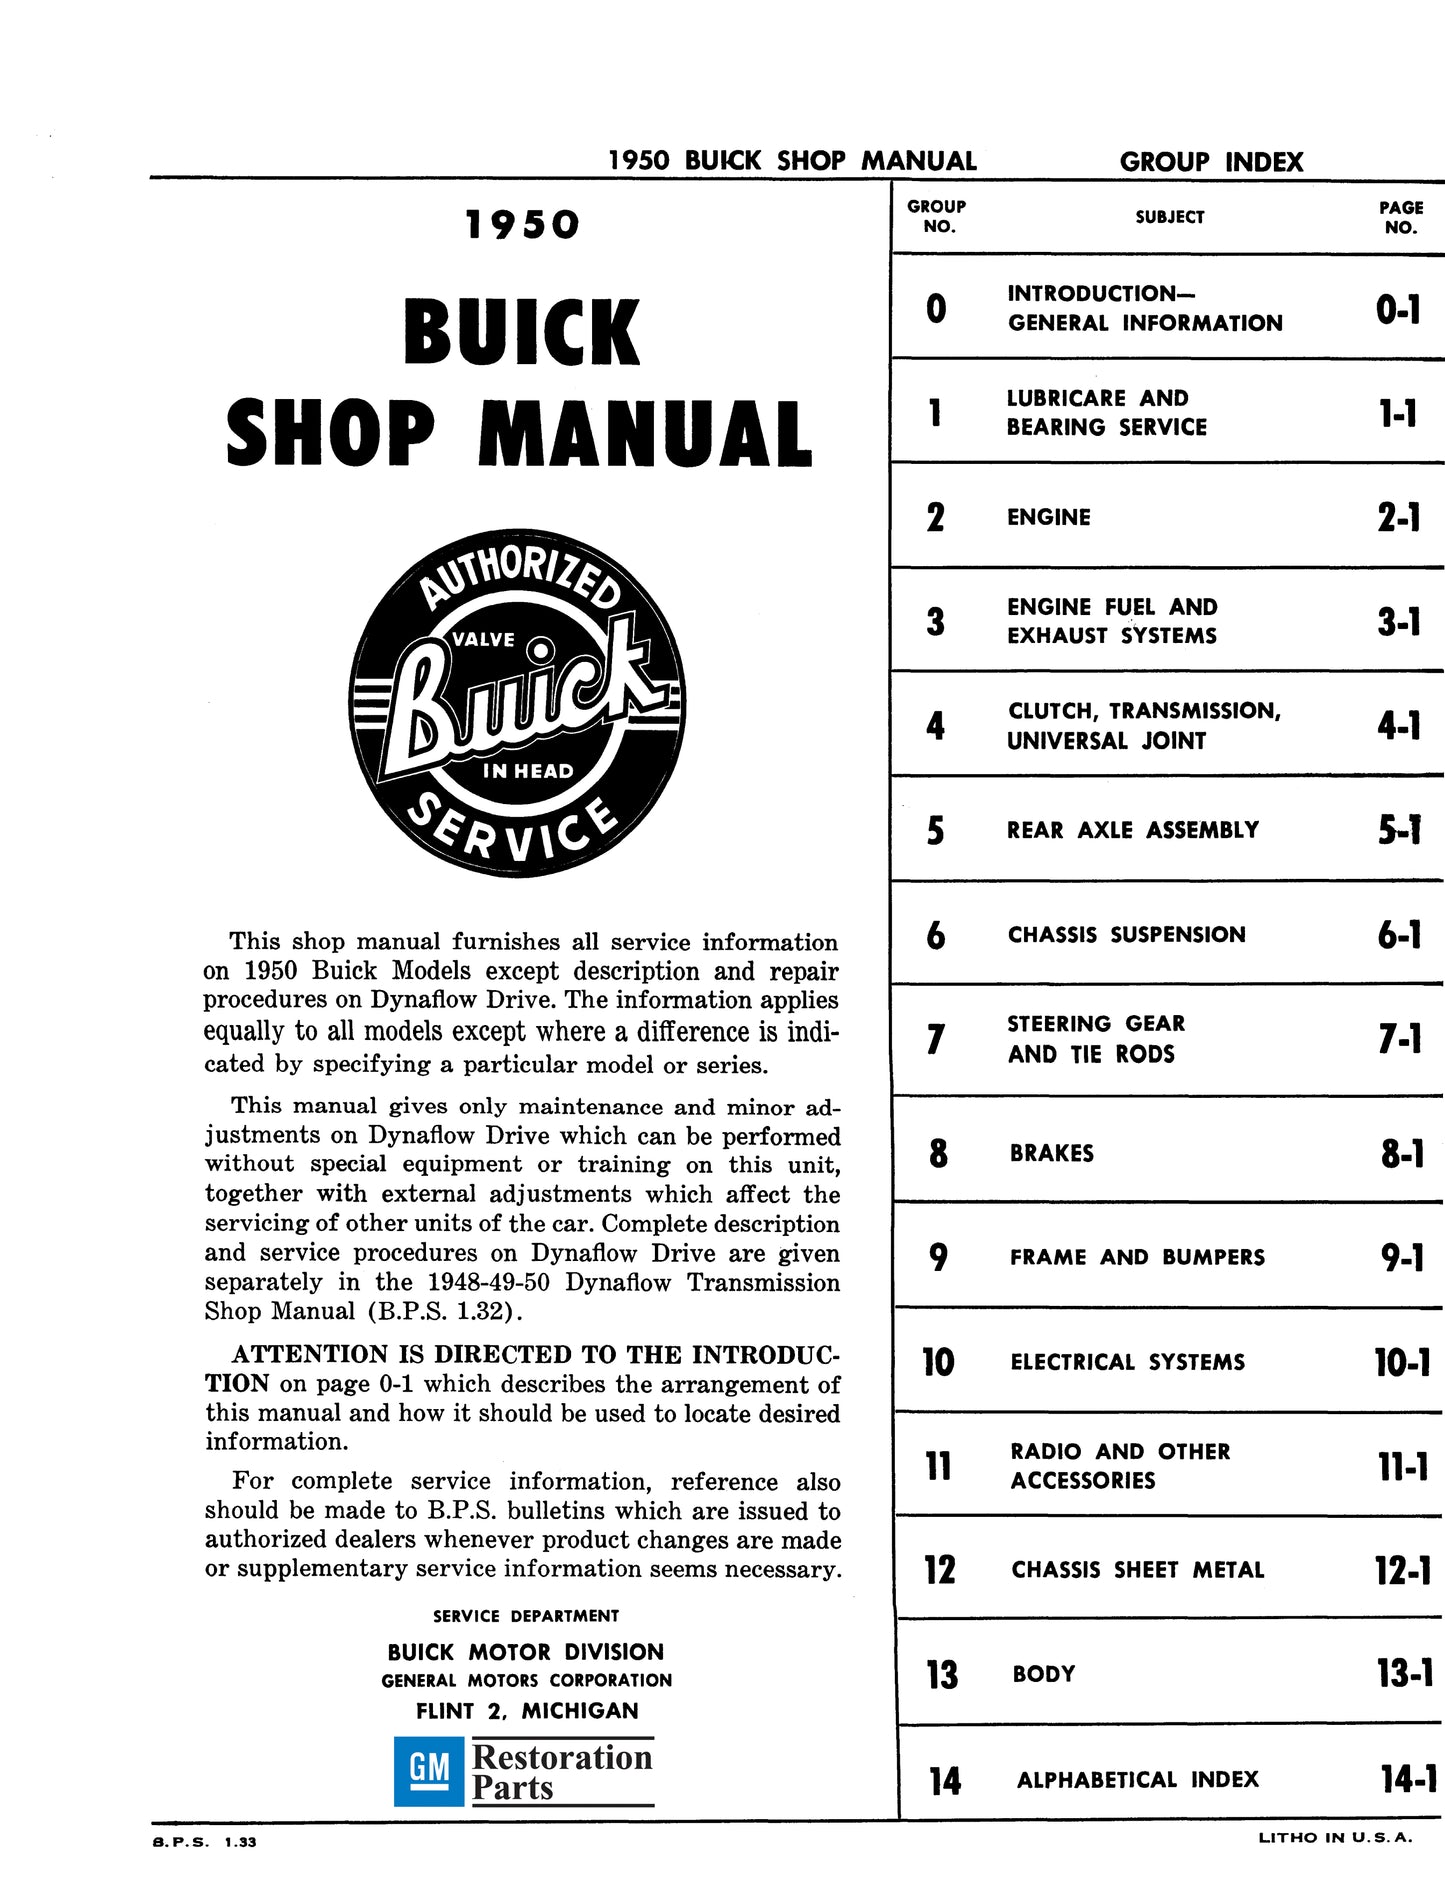 1950-1951 Buick Repair Manual - All Models